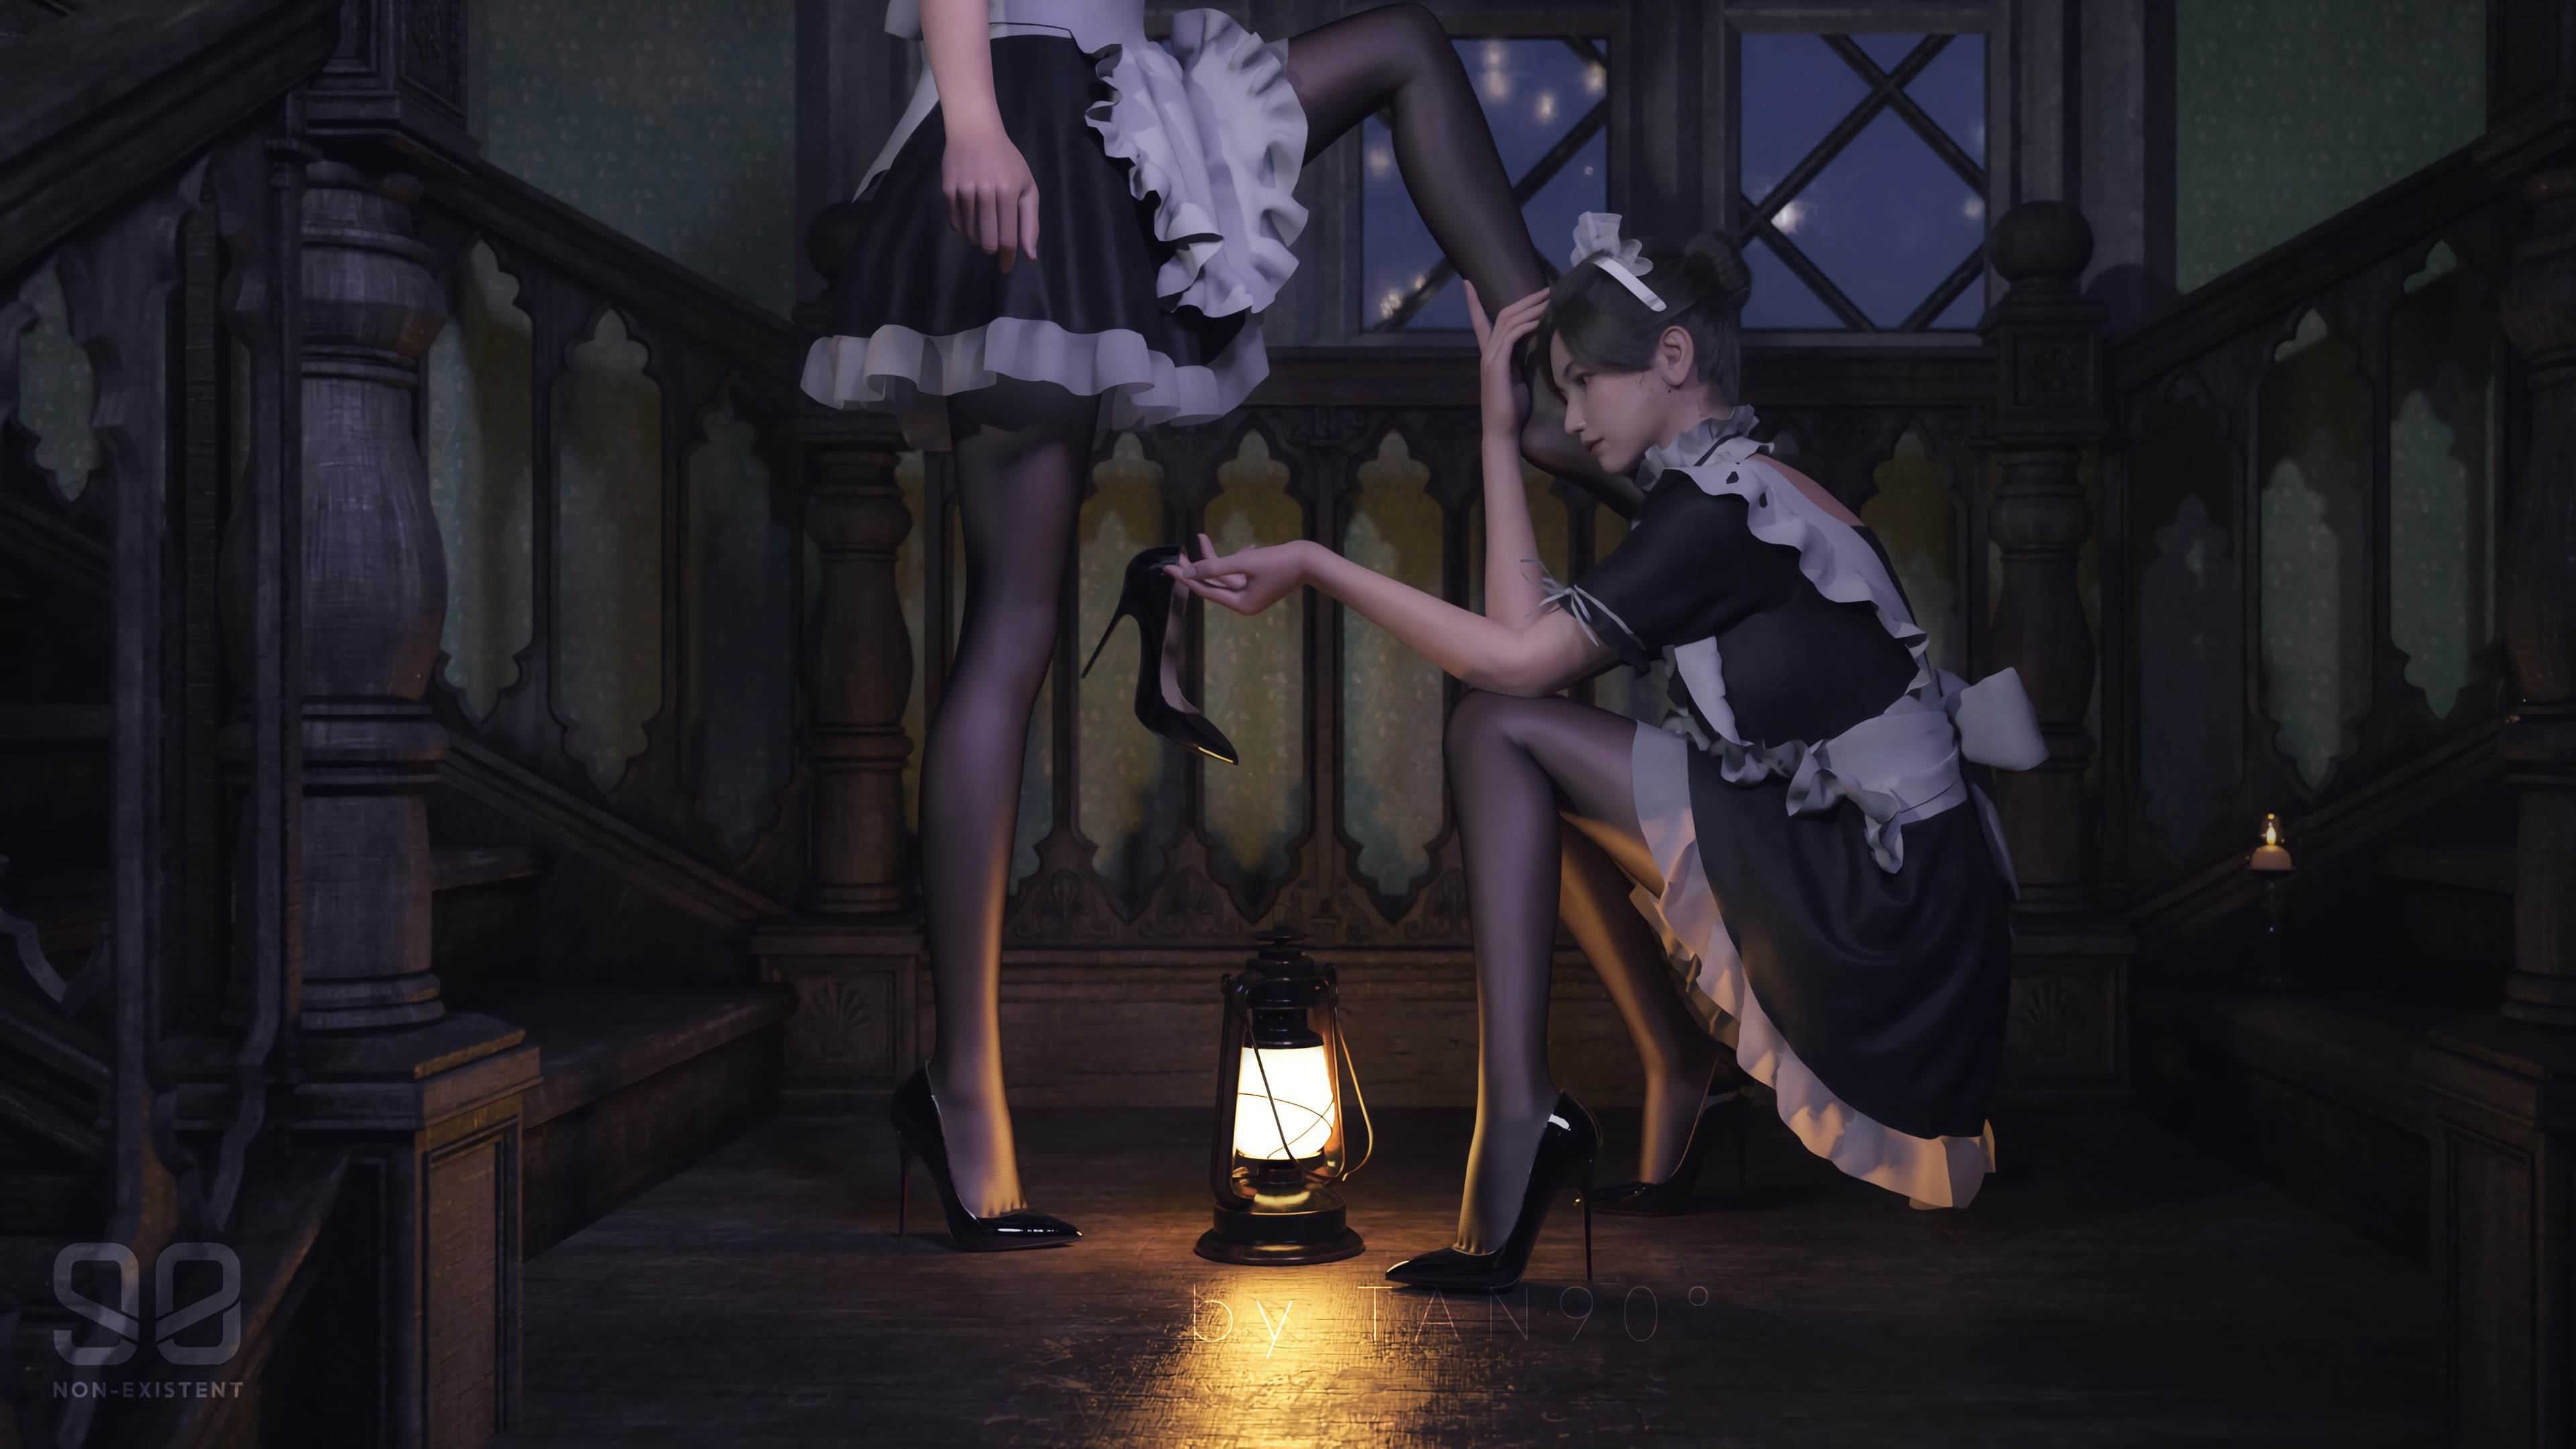 General 3840x2160 maid black stockings heels women low light digital art watermarked